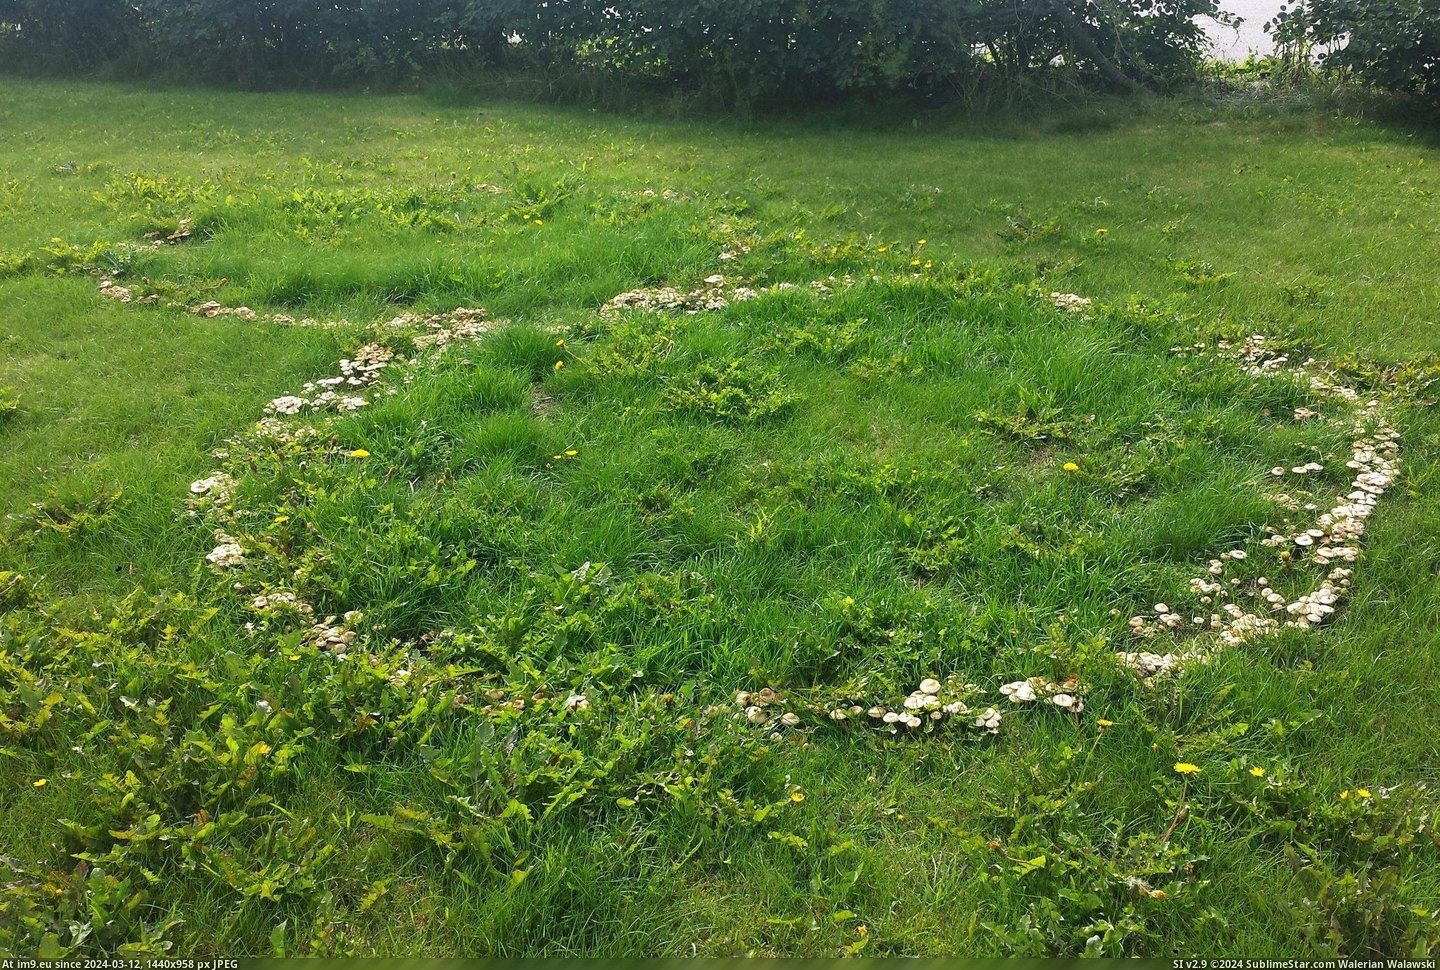 #Rings #Mushrooms #Lawn [Mildlyinteresting] I found rings of mushrooms on the lawn Pic. (Image of album My r/MILDLYINTERESTING favs))